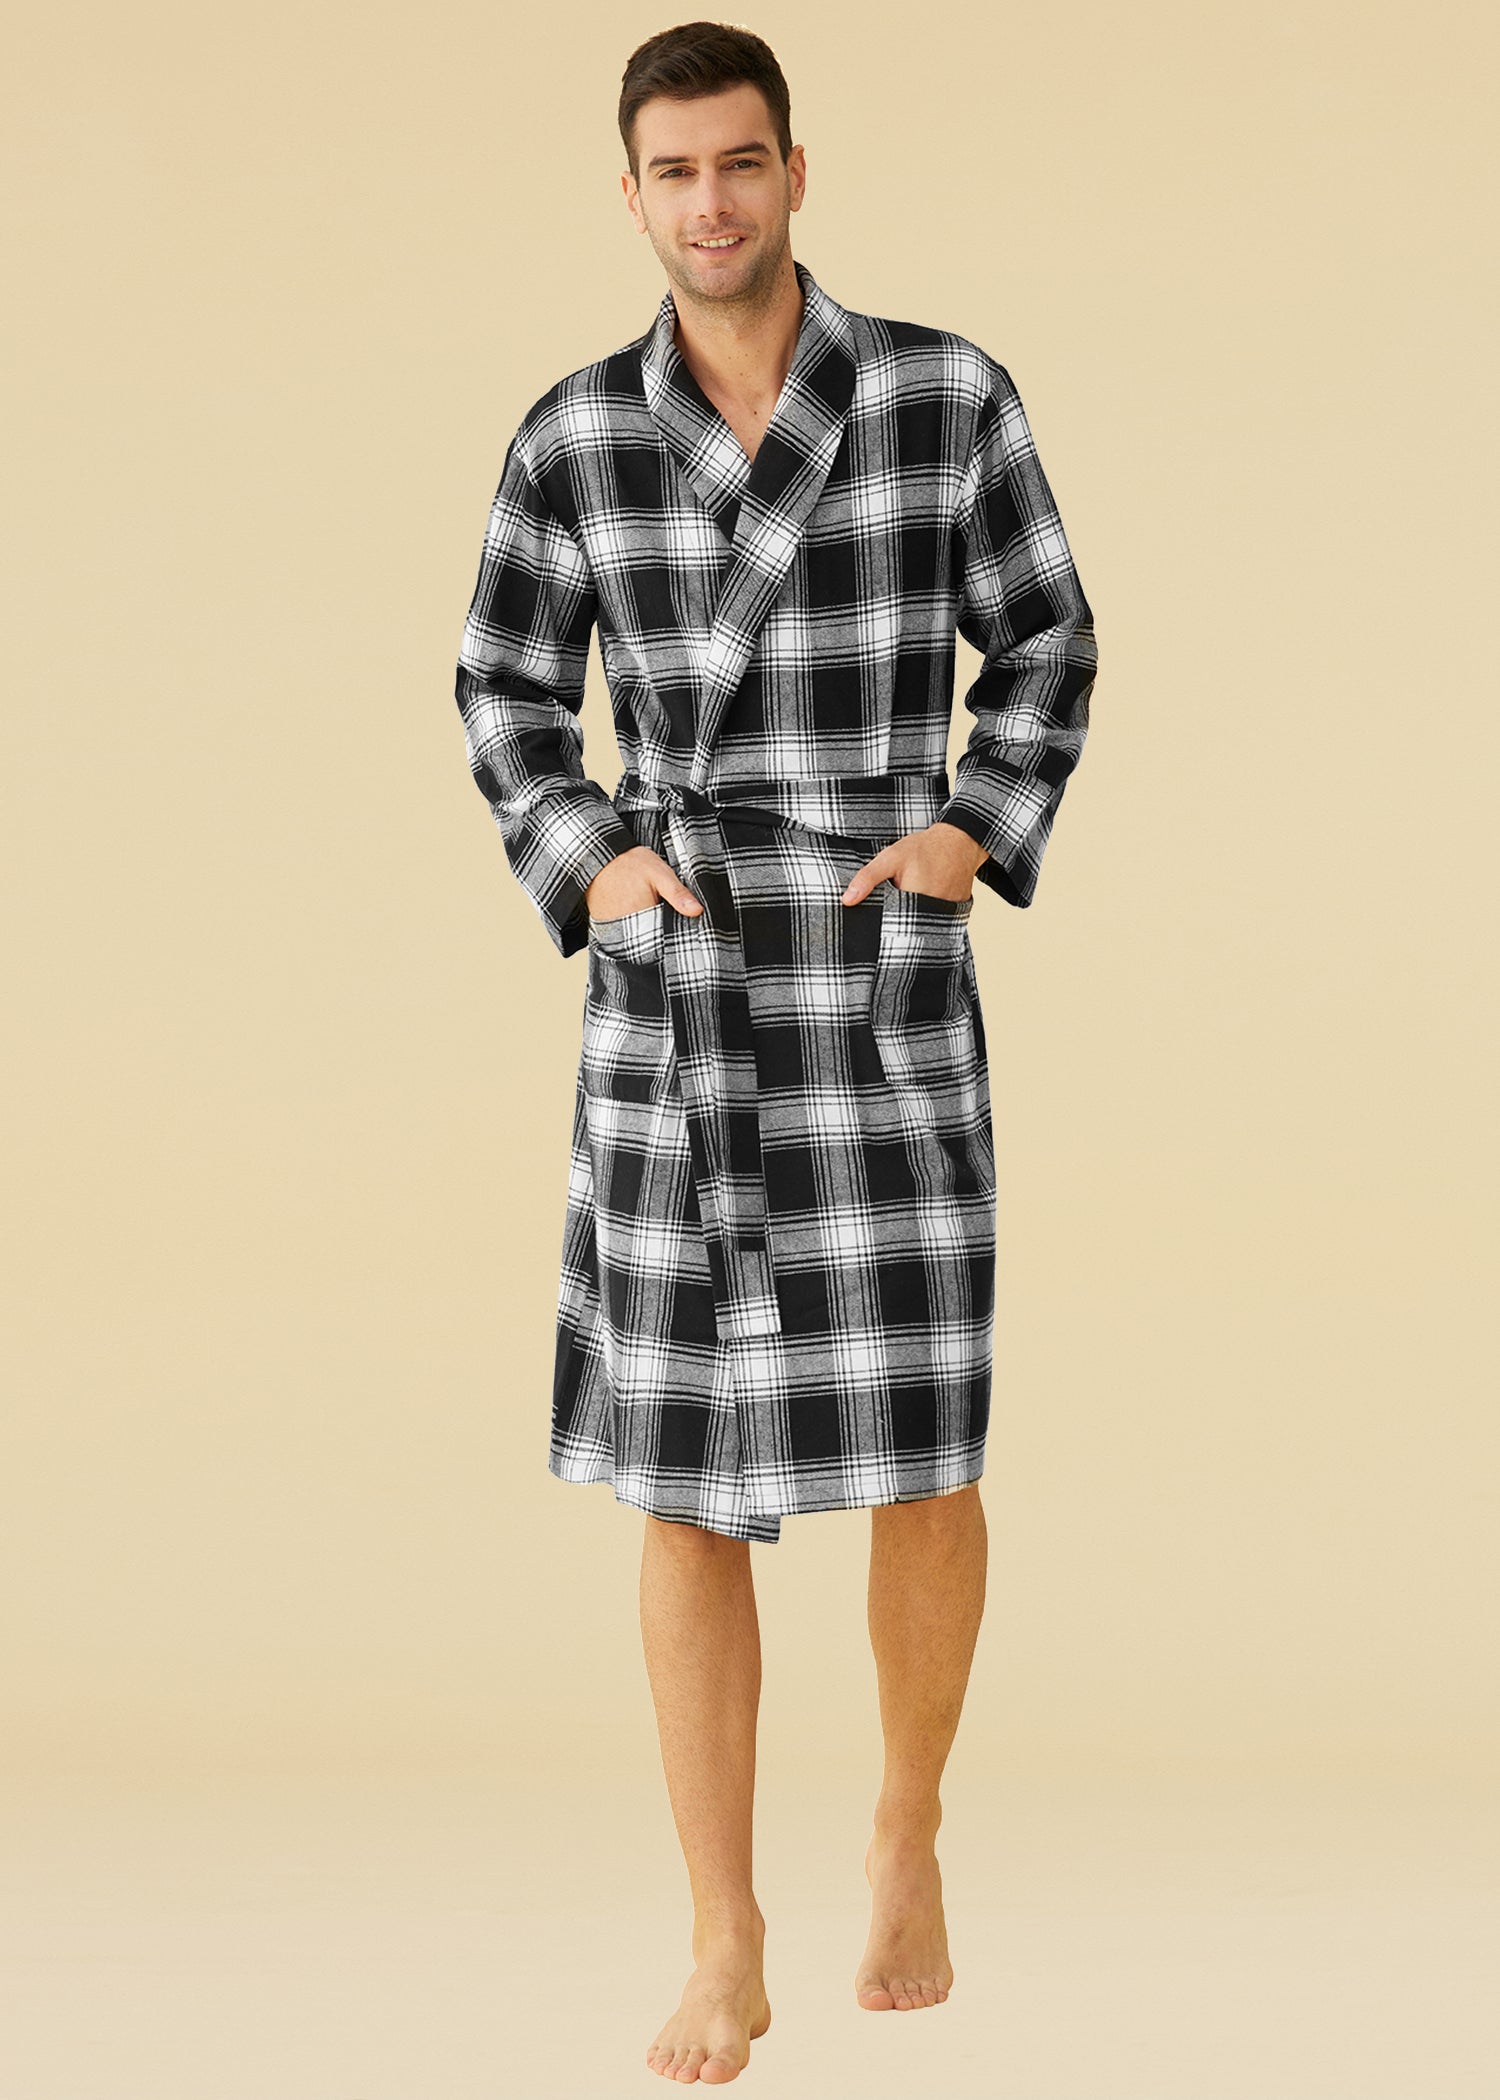 Latuza Men's Cotton Flannel Pajama Set Plaid Sleepwear, Red, 3XL